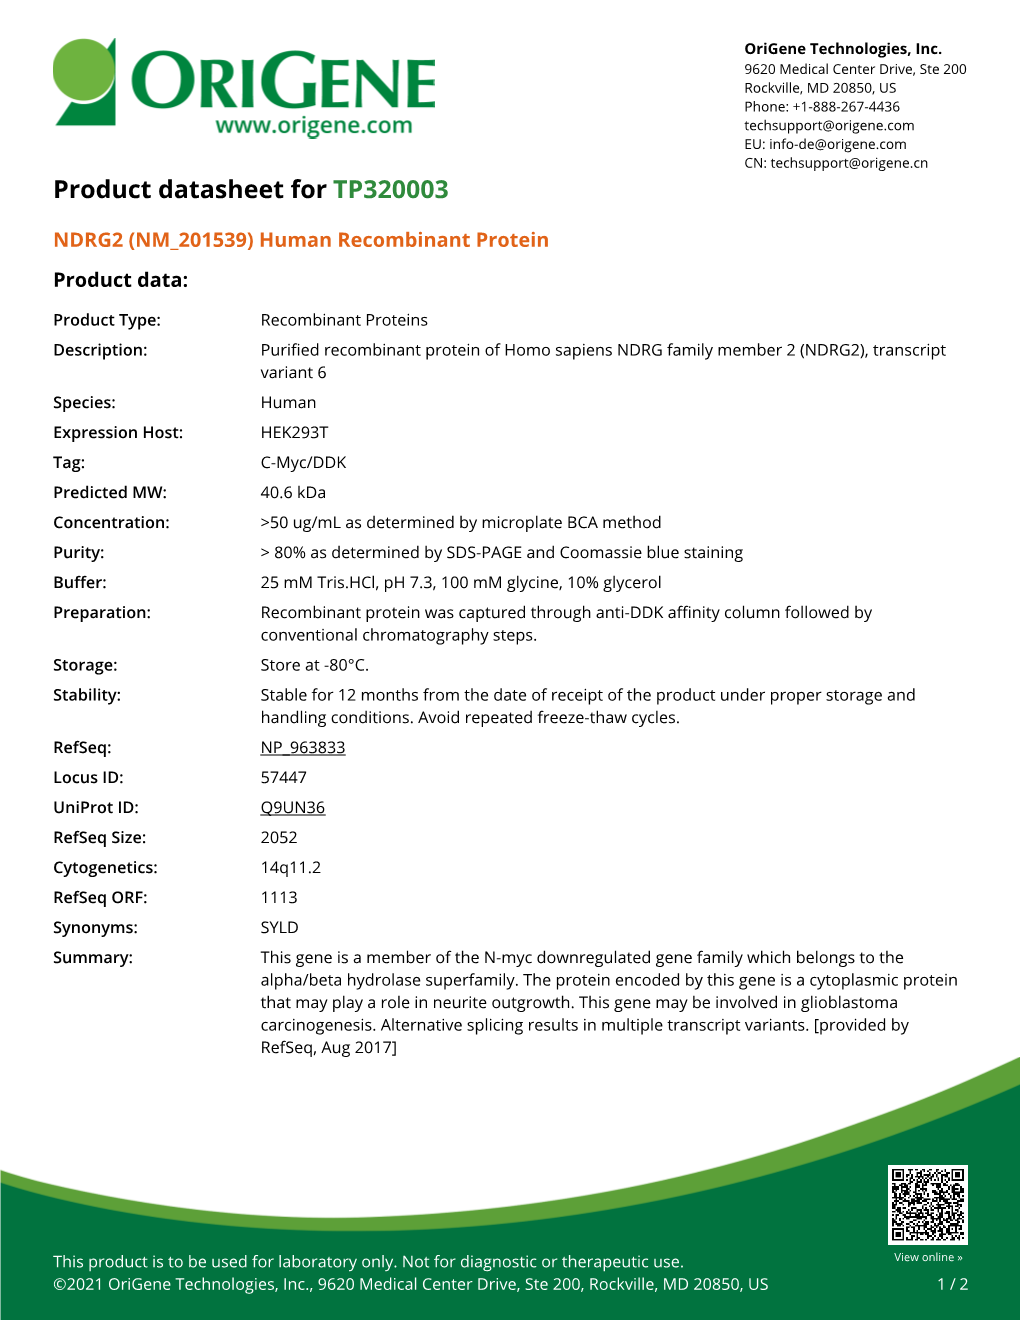 NDRG2 (NM 201539) Human Recombinant Protein – TP320003